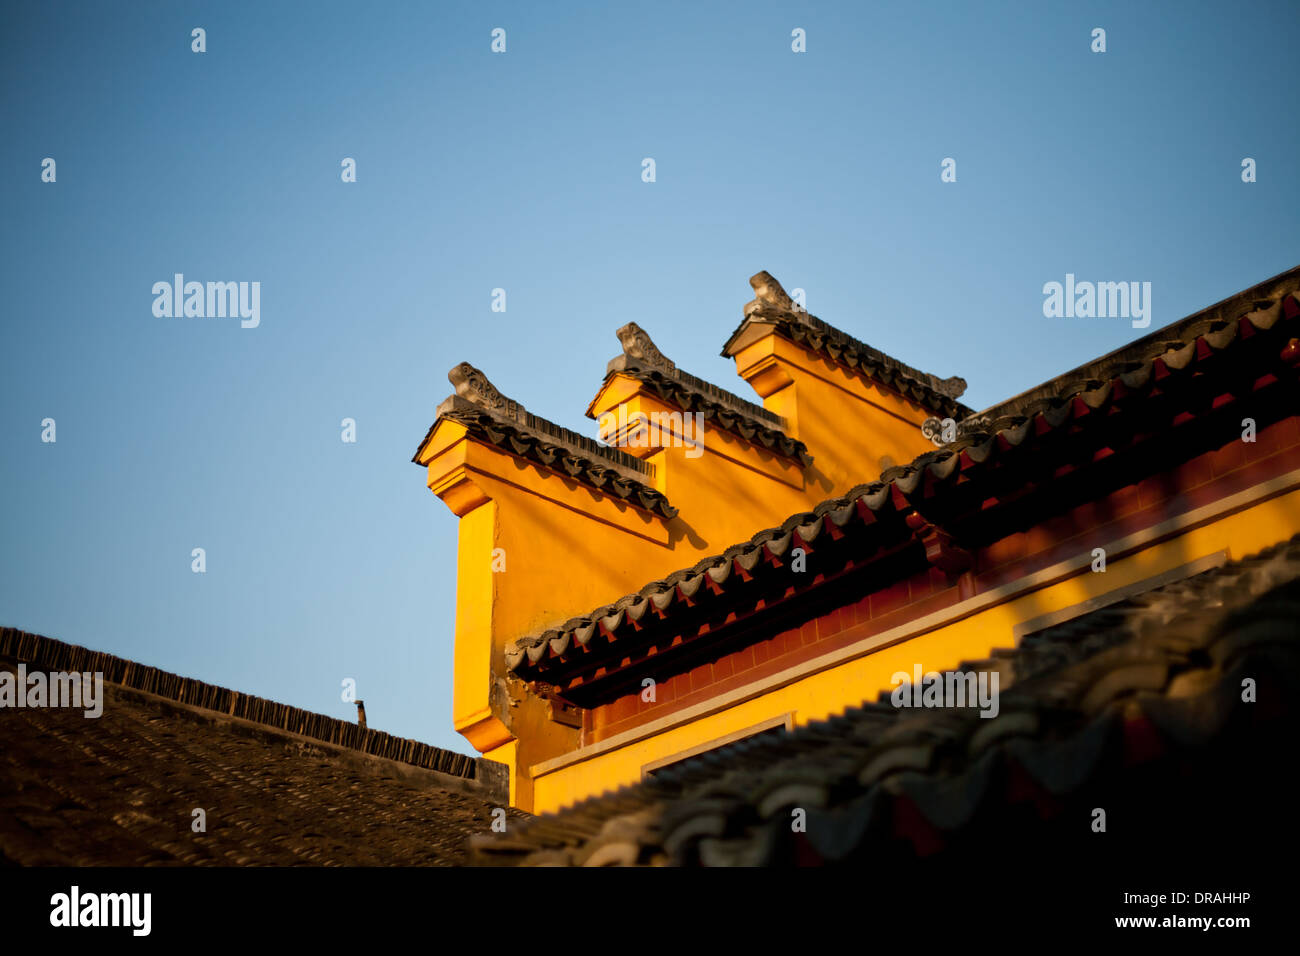 Nanjing China travel locations Stock Photo